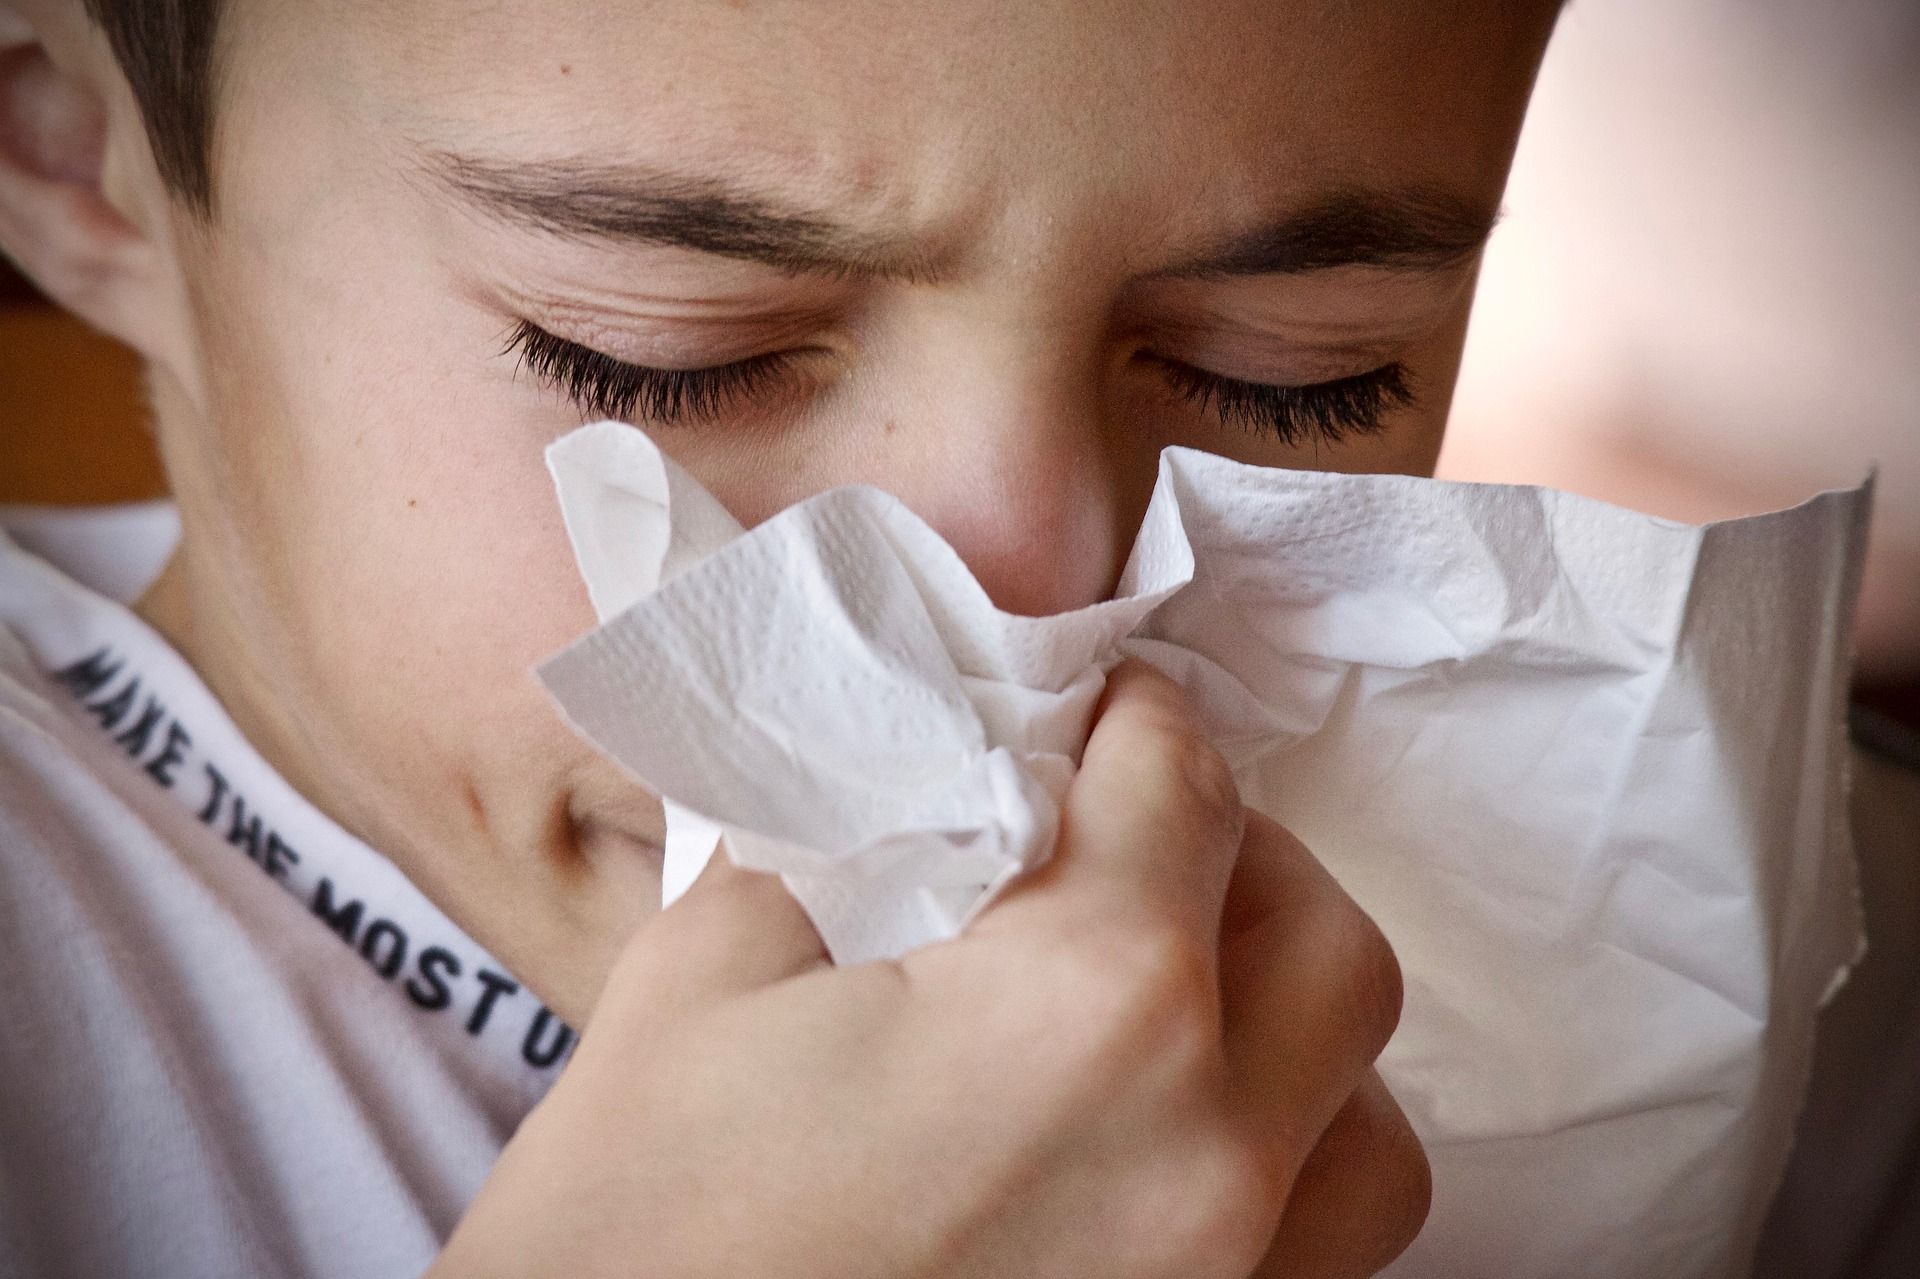 Libur Panjang, Ini Tips Hindari Influenza Pas Traveling